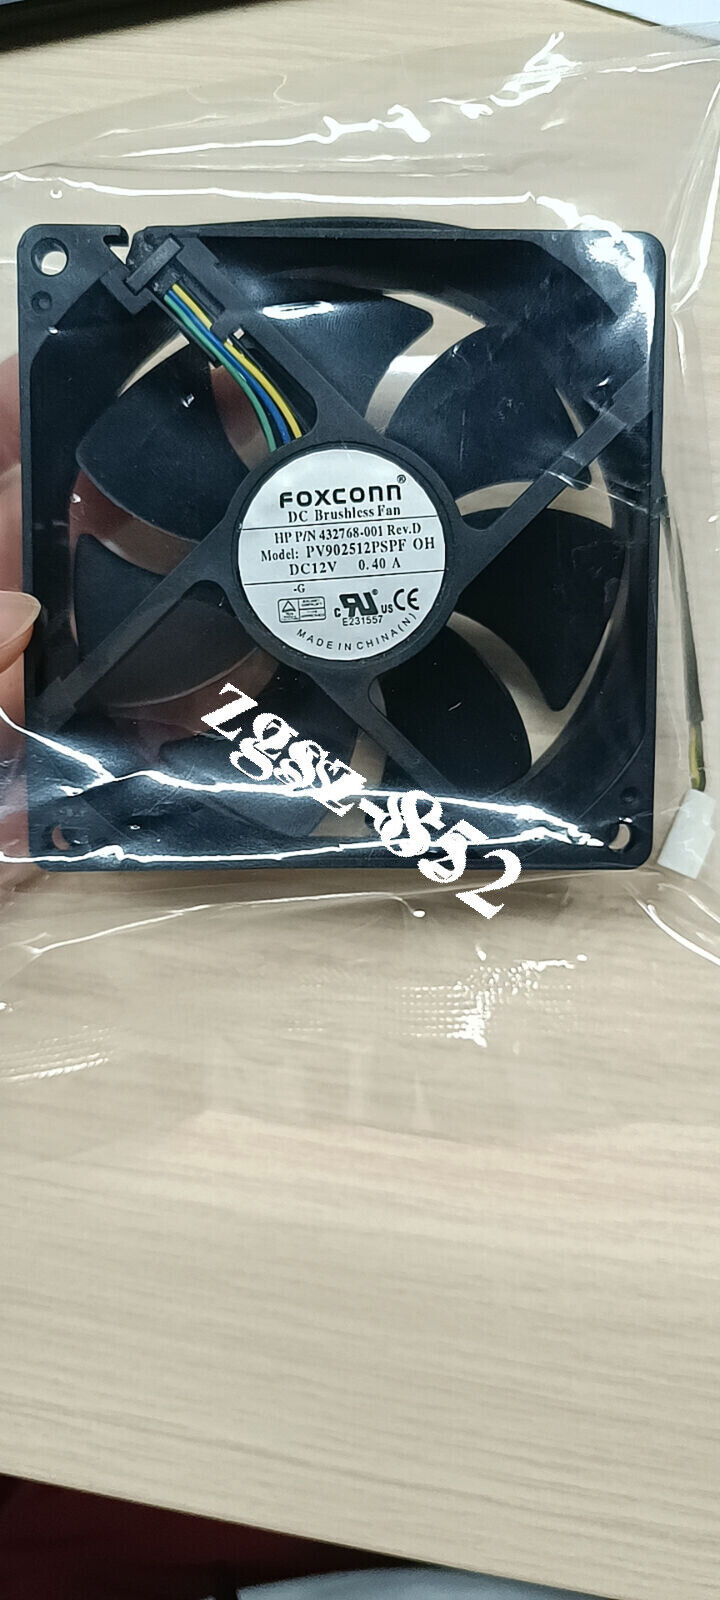 FOXCONN PV902512PSPF 0H 9025 12V 0.40A 4-pin fan server inverter cooling fan